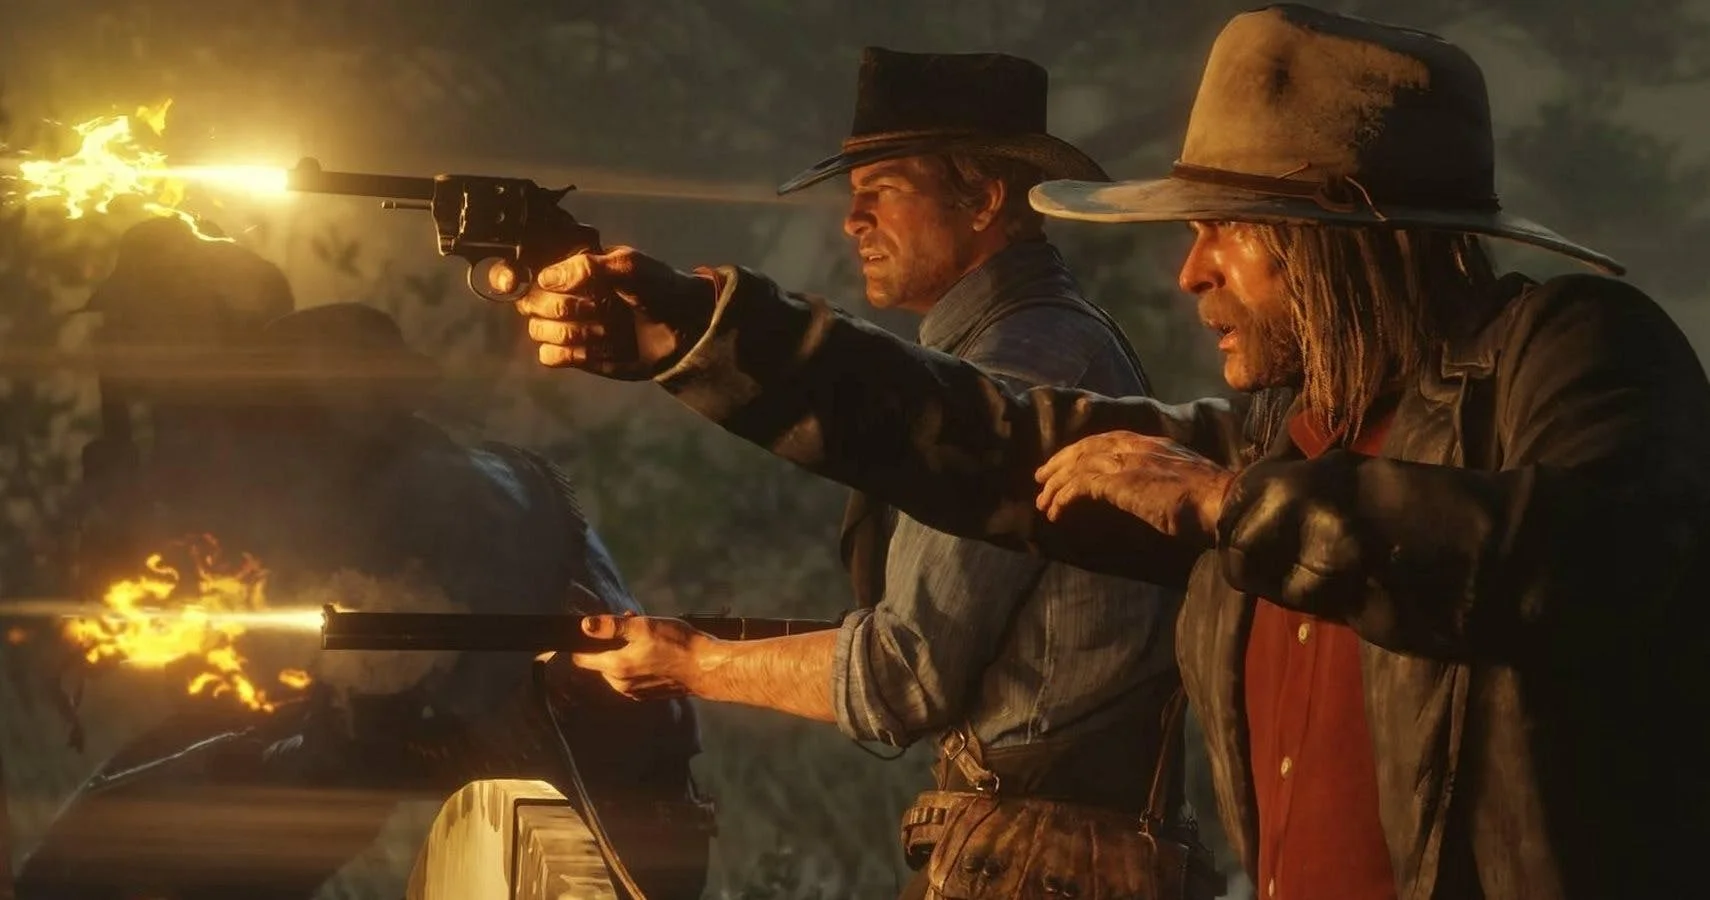 Гифка дня: молниеносная реакция на опасность в Red Dead Redemption 2 - фото 1